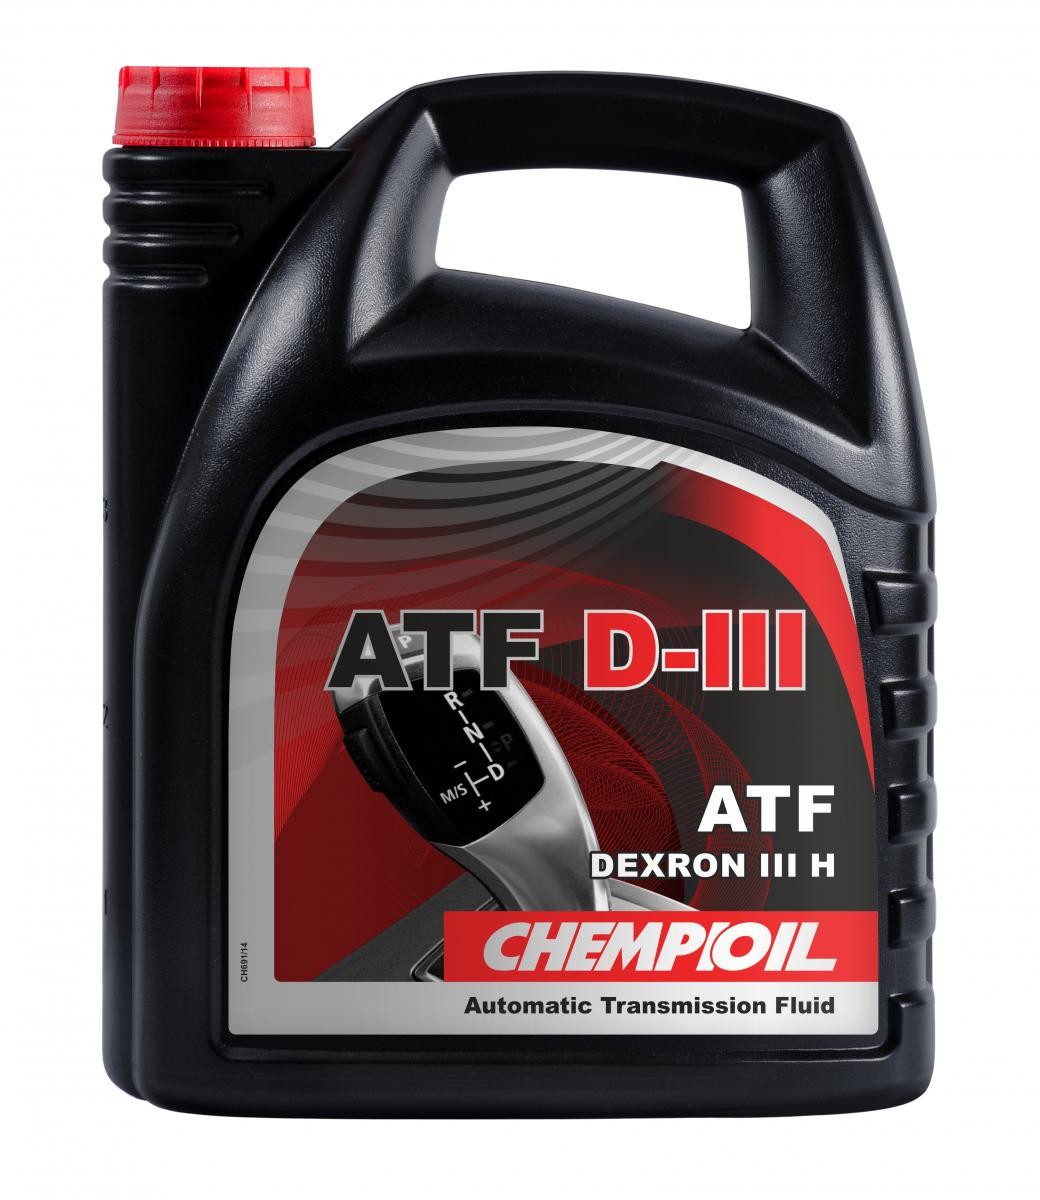 CHEMPIOIL ATF, D-III CH8902-4 Automatic transmission fluid ATF III, 4l, red